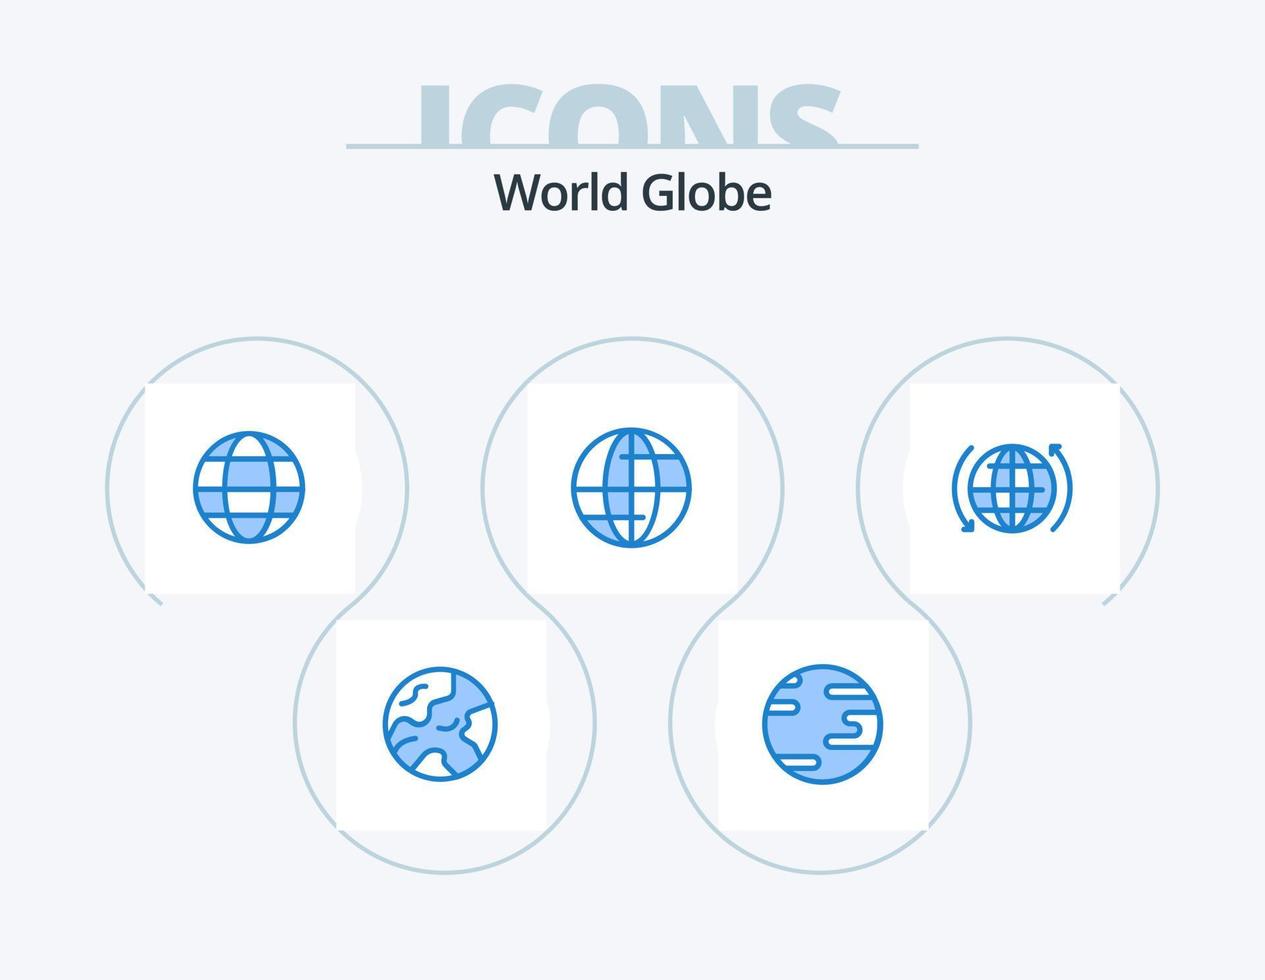 globo azul icon pack 5 diseño de iconos. . flecha. web. Internet. global vector